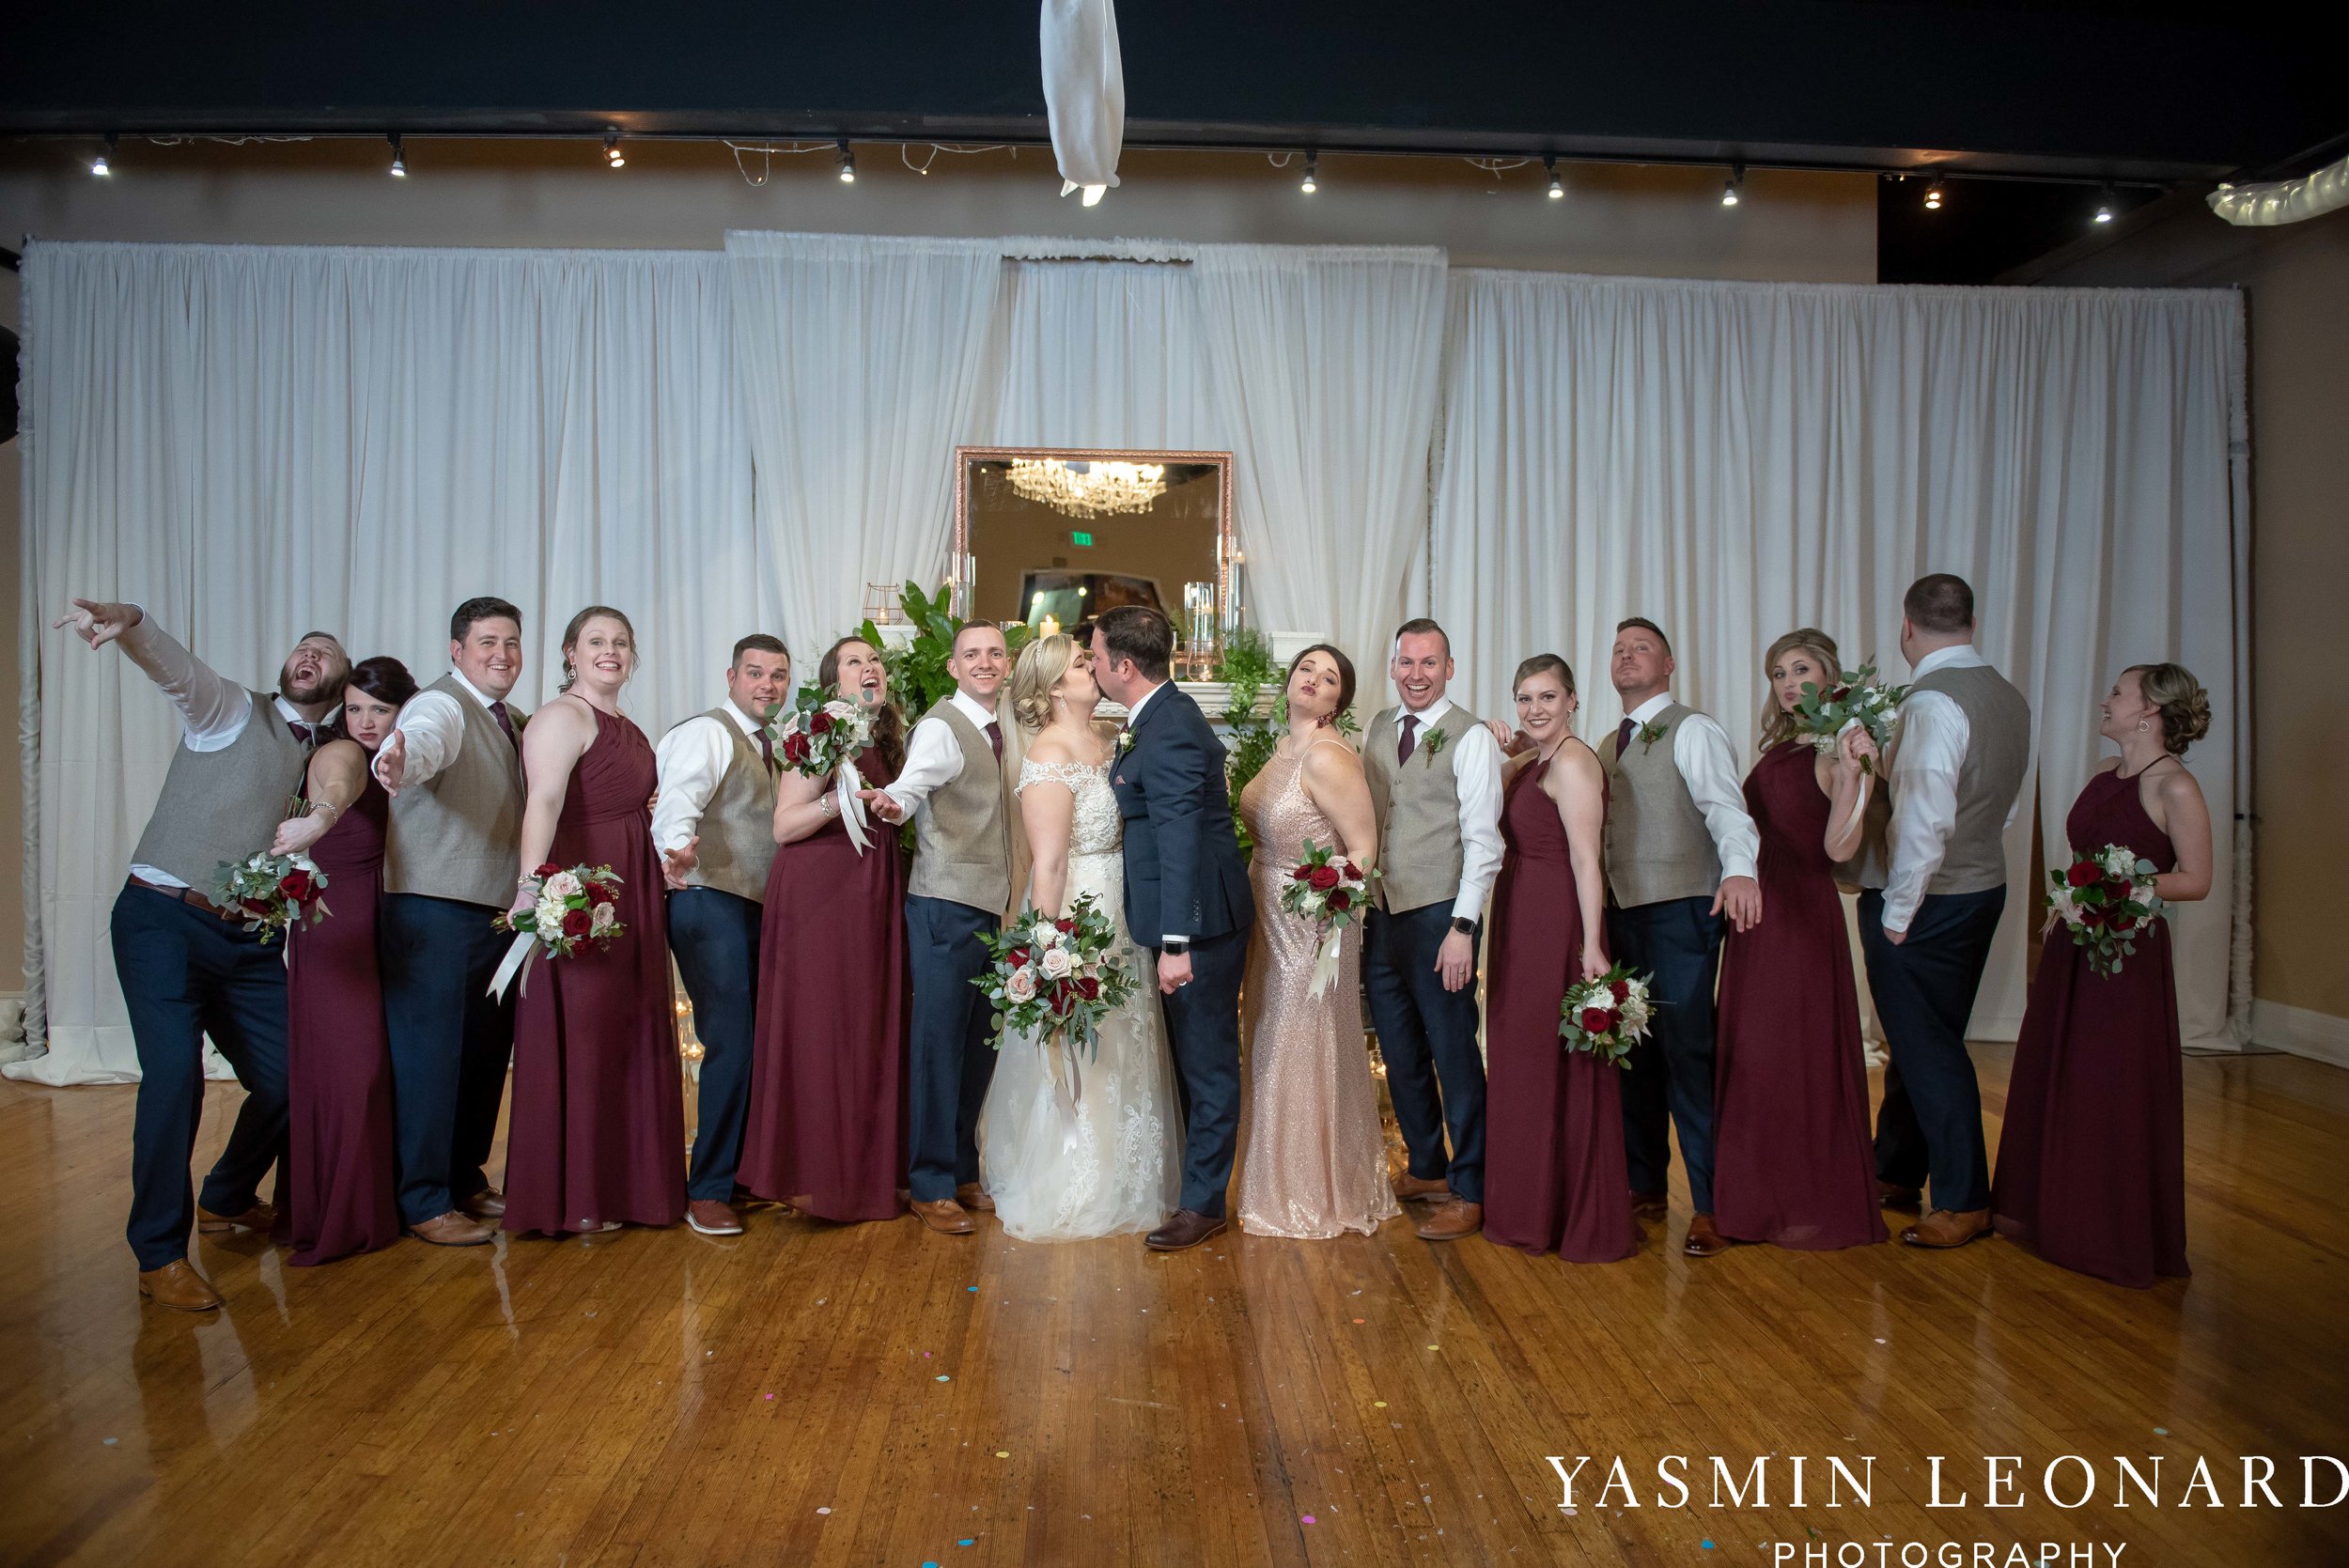 Rebekah and Matt - 105 Worth Event Centre - Yasmin Leonard Photography - Asheboro Wedding - NC Wedding - High Point Weddings - Triad Weddings - Winter Wedding-34.jpg